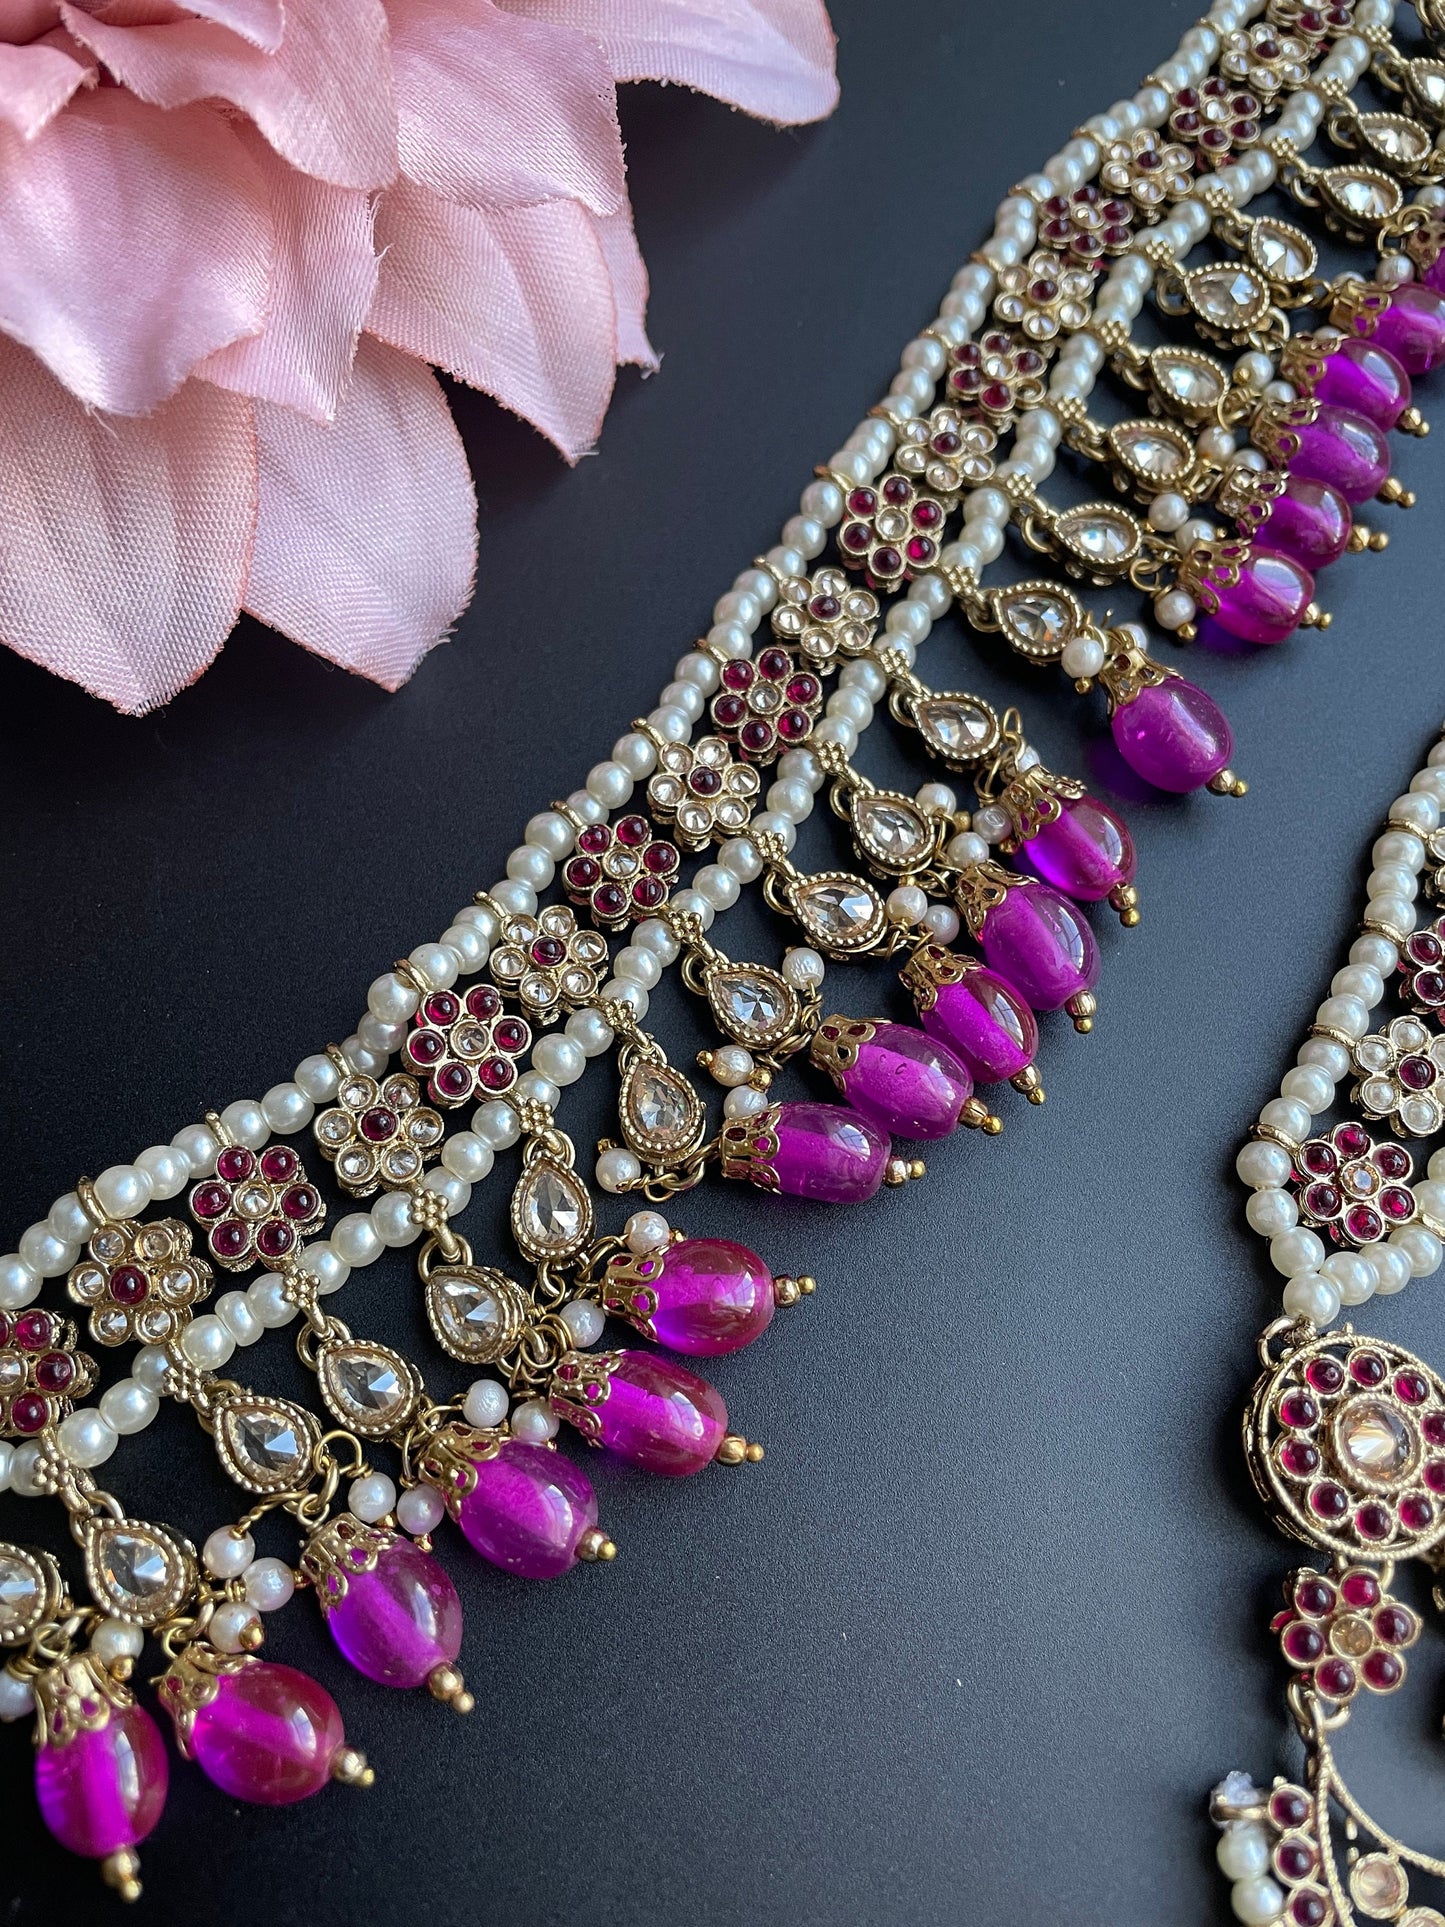 Red Polki Choker with tikka and earrings/ Simple Indian wedding jewelry/ Dainty Kundan Choker set/Bridal Sangeet colorful necklace set